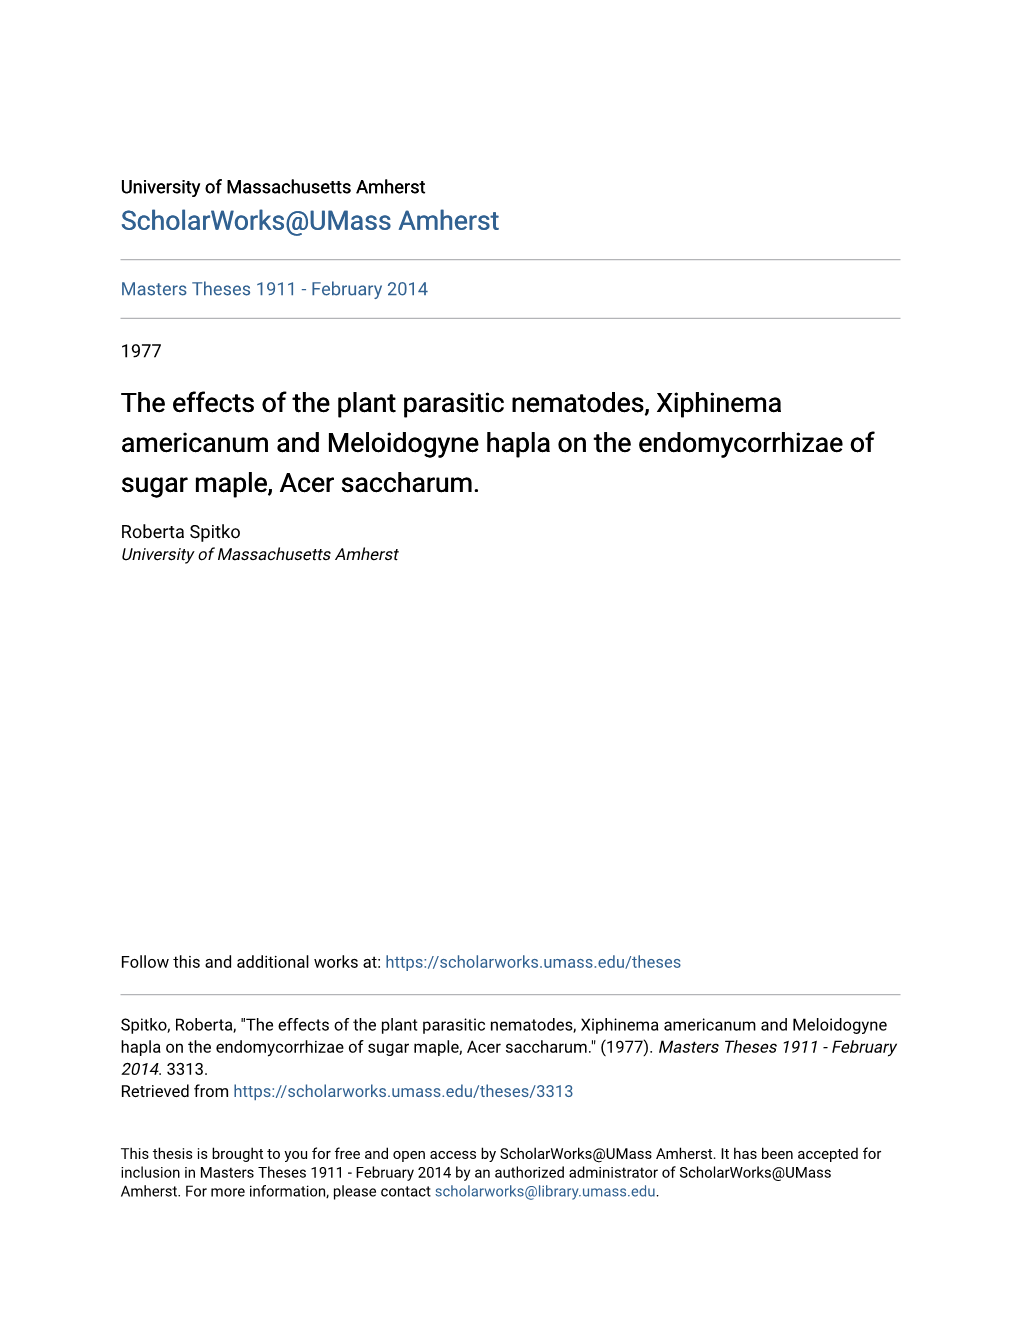 The Effects of the Plant Parasitic Nematodes, Xiphinema Americanum and Meloidogyne Hapla on the Endomycorrhizae of Sugar Maple, Acer Saccharum